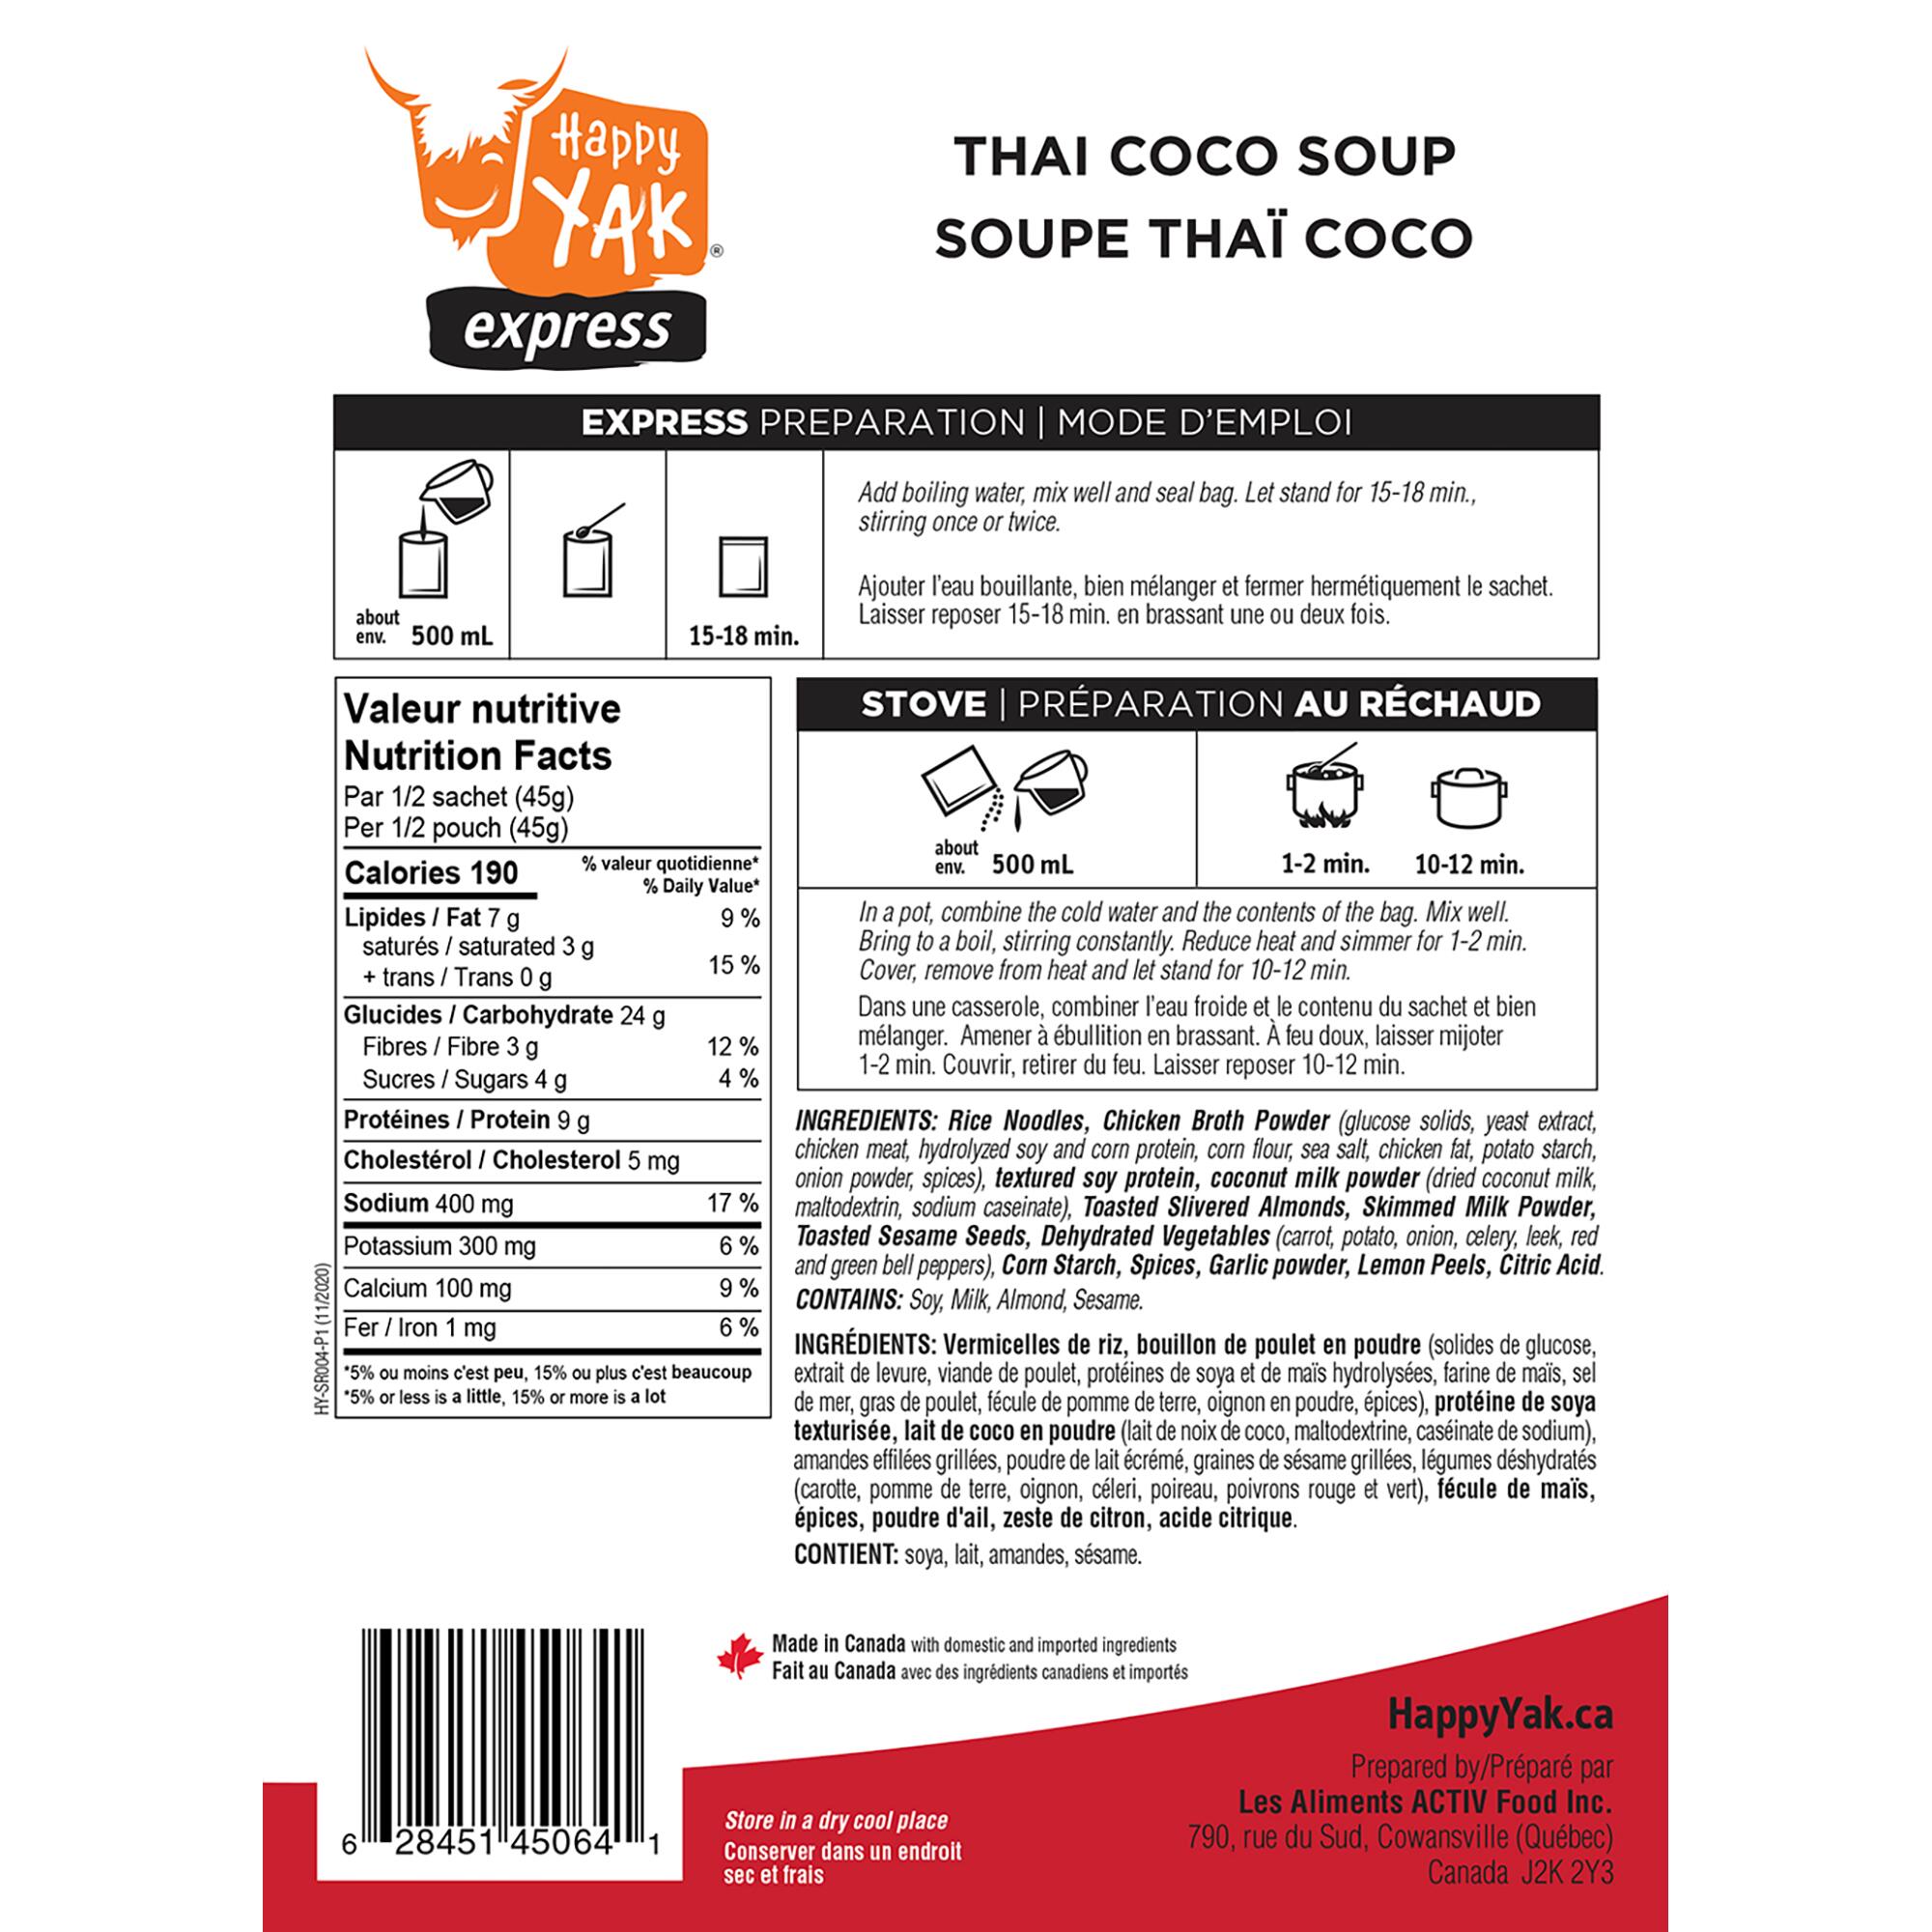 Soupe Thai coco - HAPPY YAK